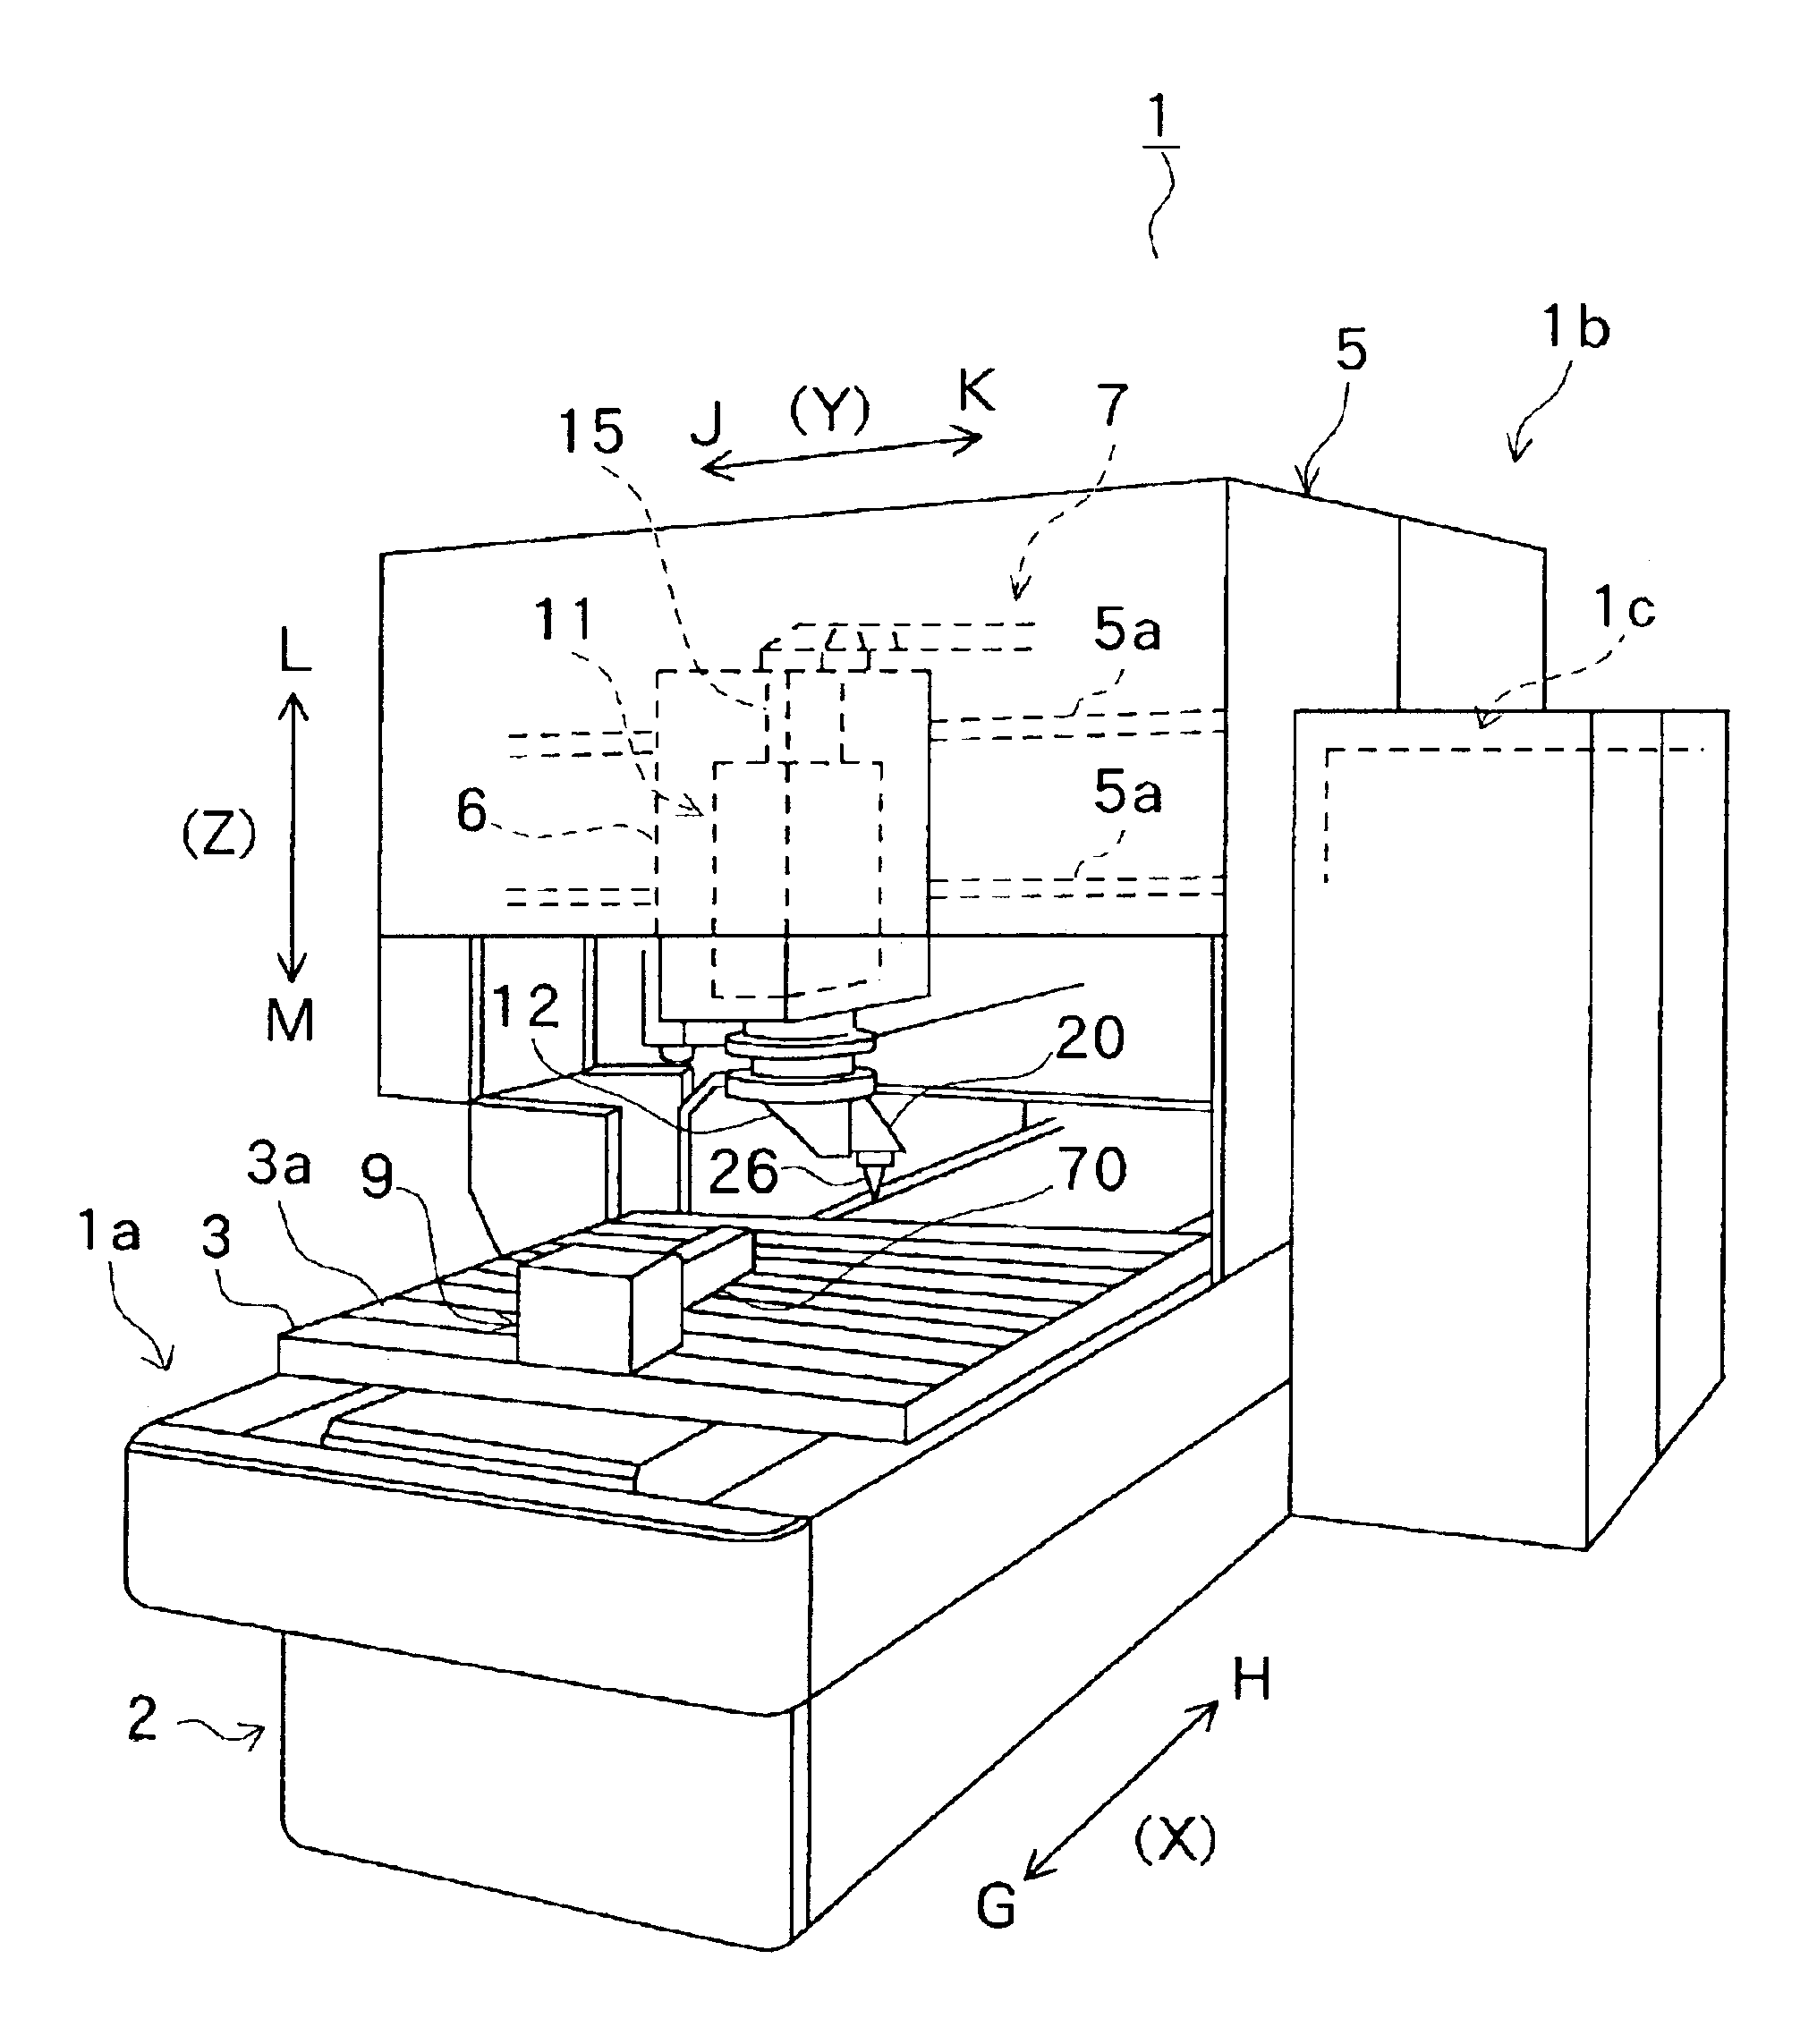 Three dimensional linear machining apparatus